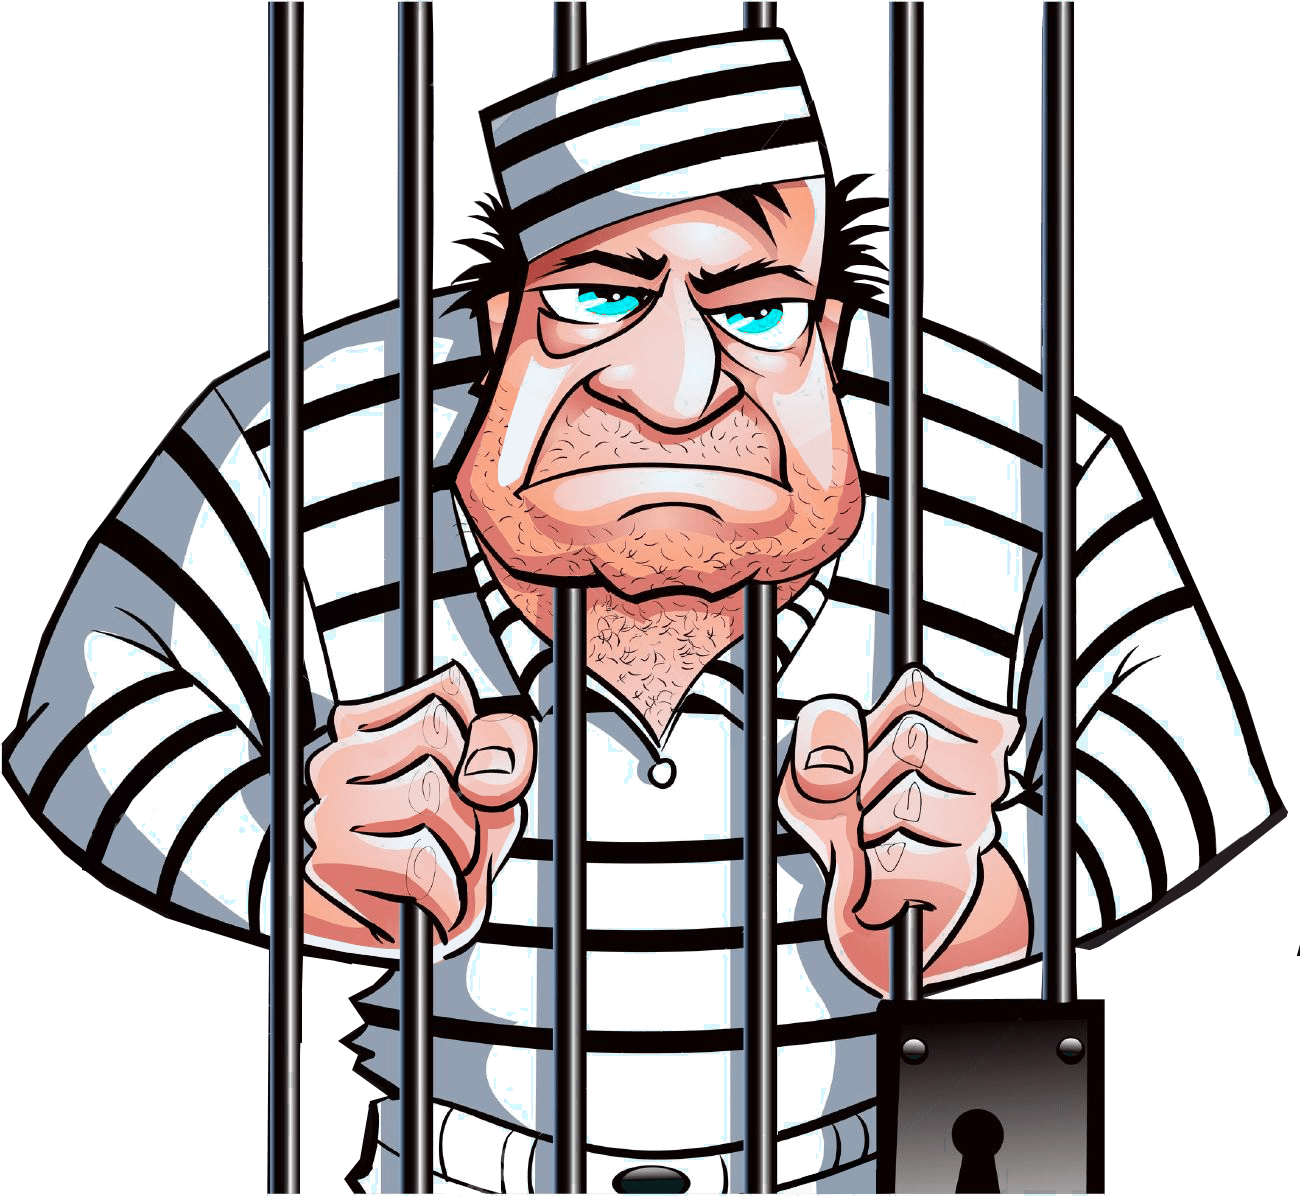 Wtf - Cartoon Prisoner Behind Bars (1300x1196)